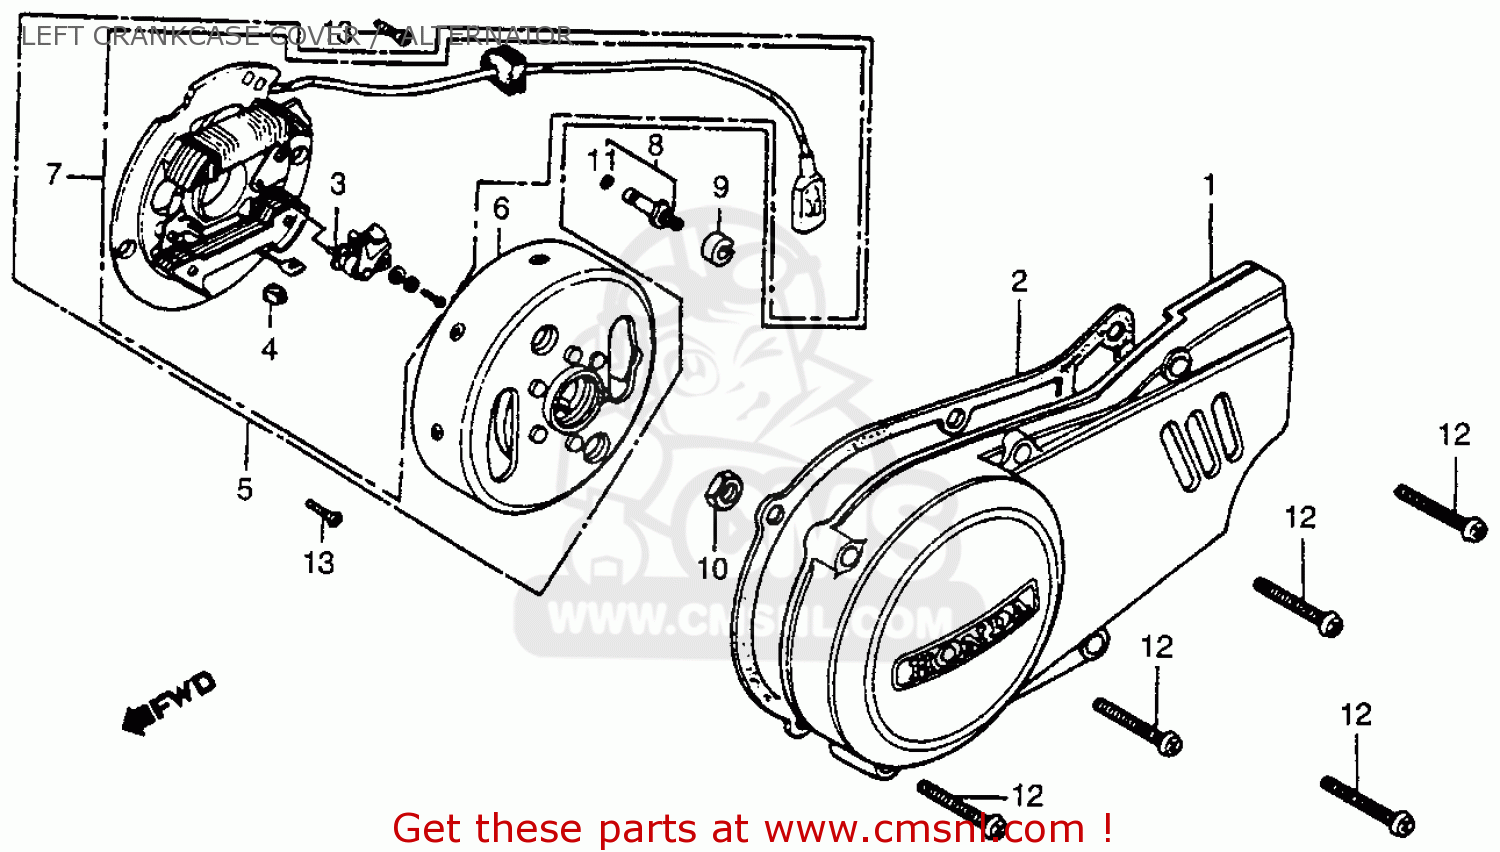 Parts for 1982 honda xr80